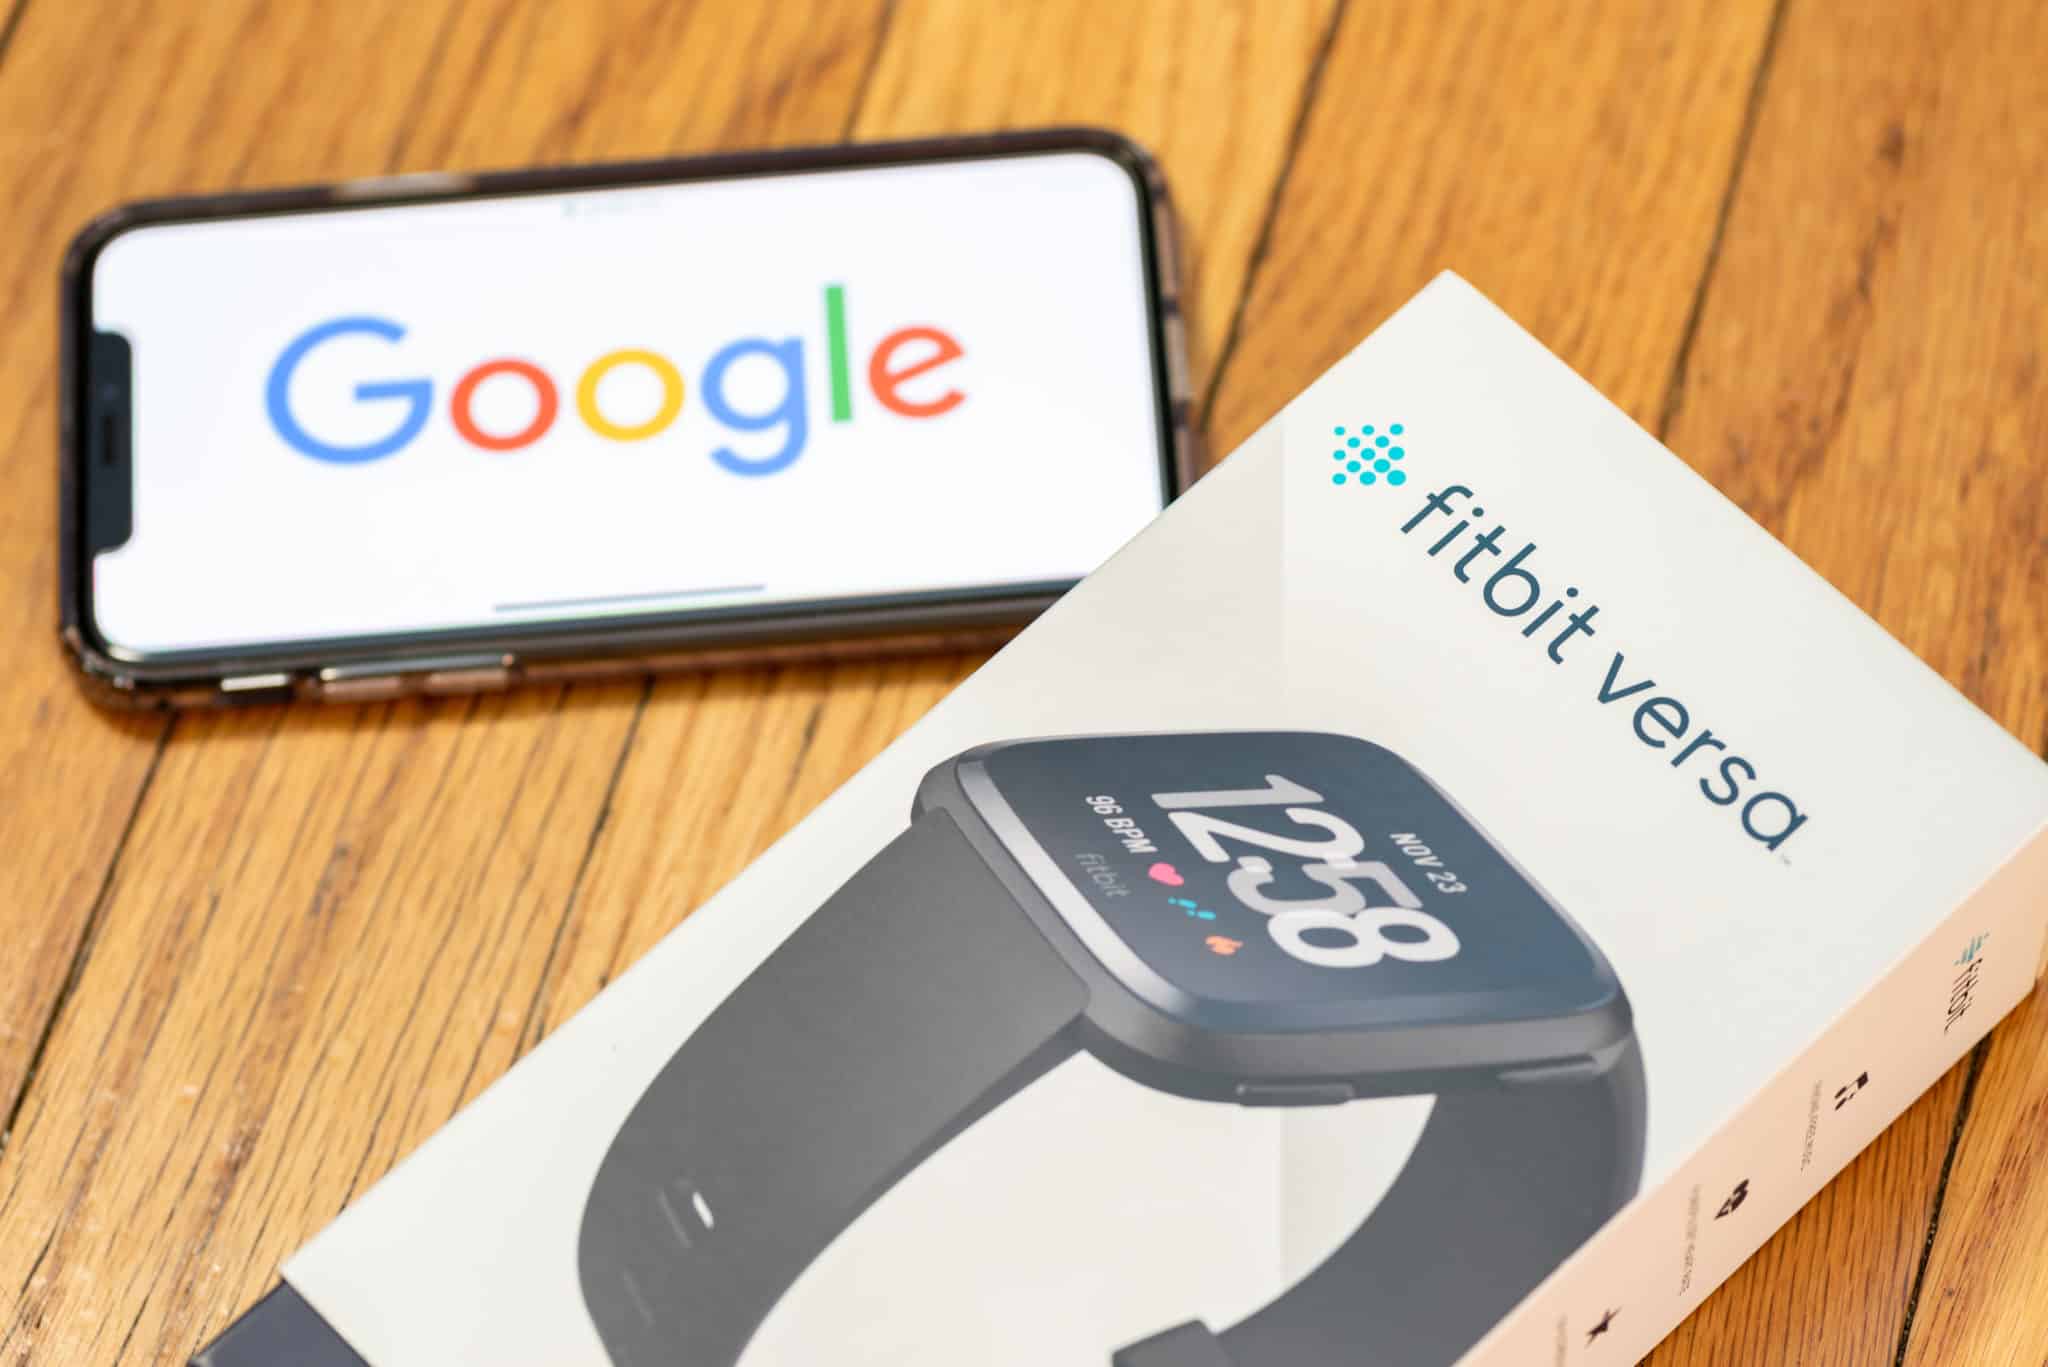 Google’s Fitbit Deal Needs Deep Scrutiny